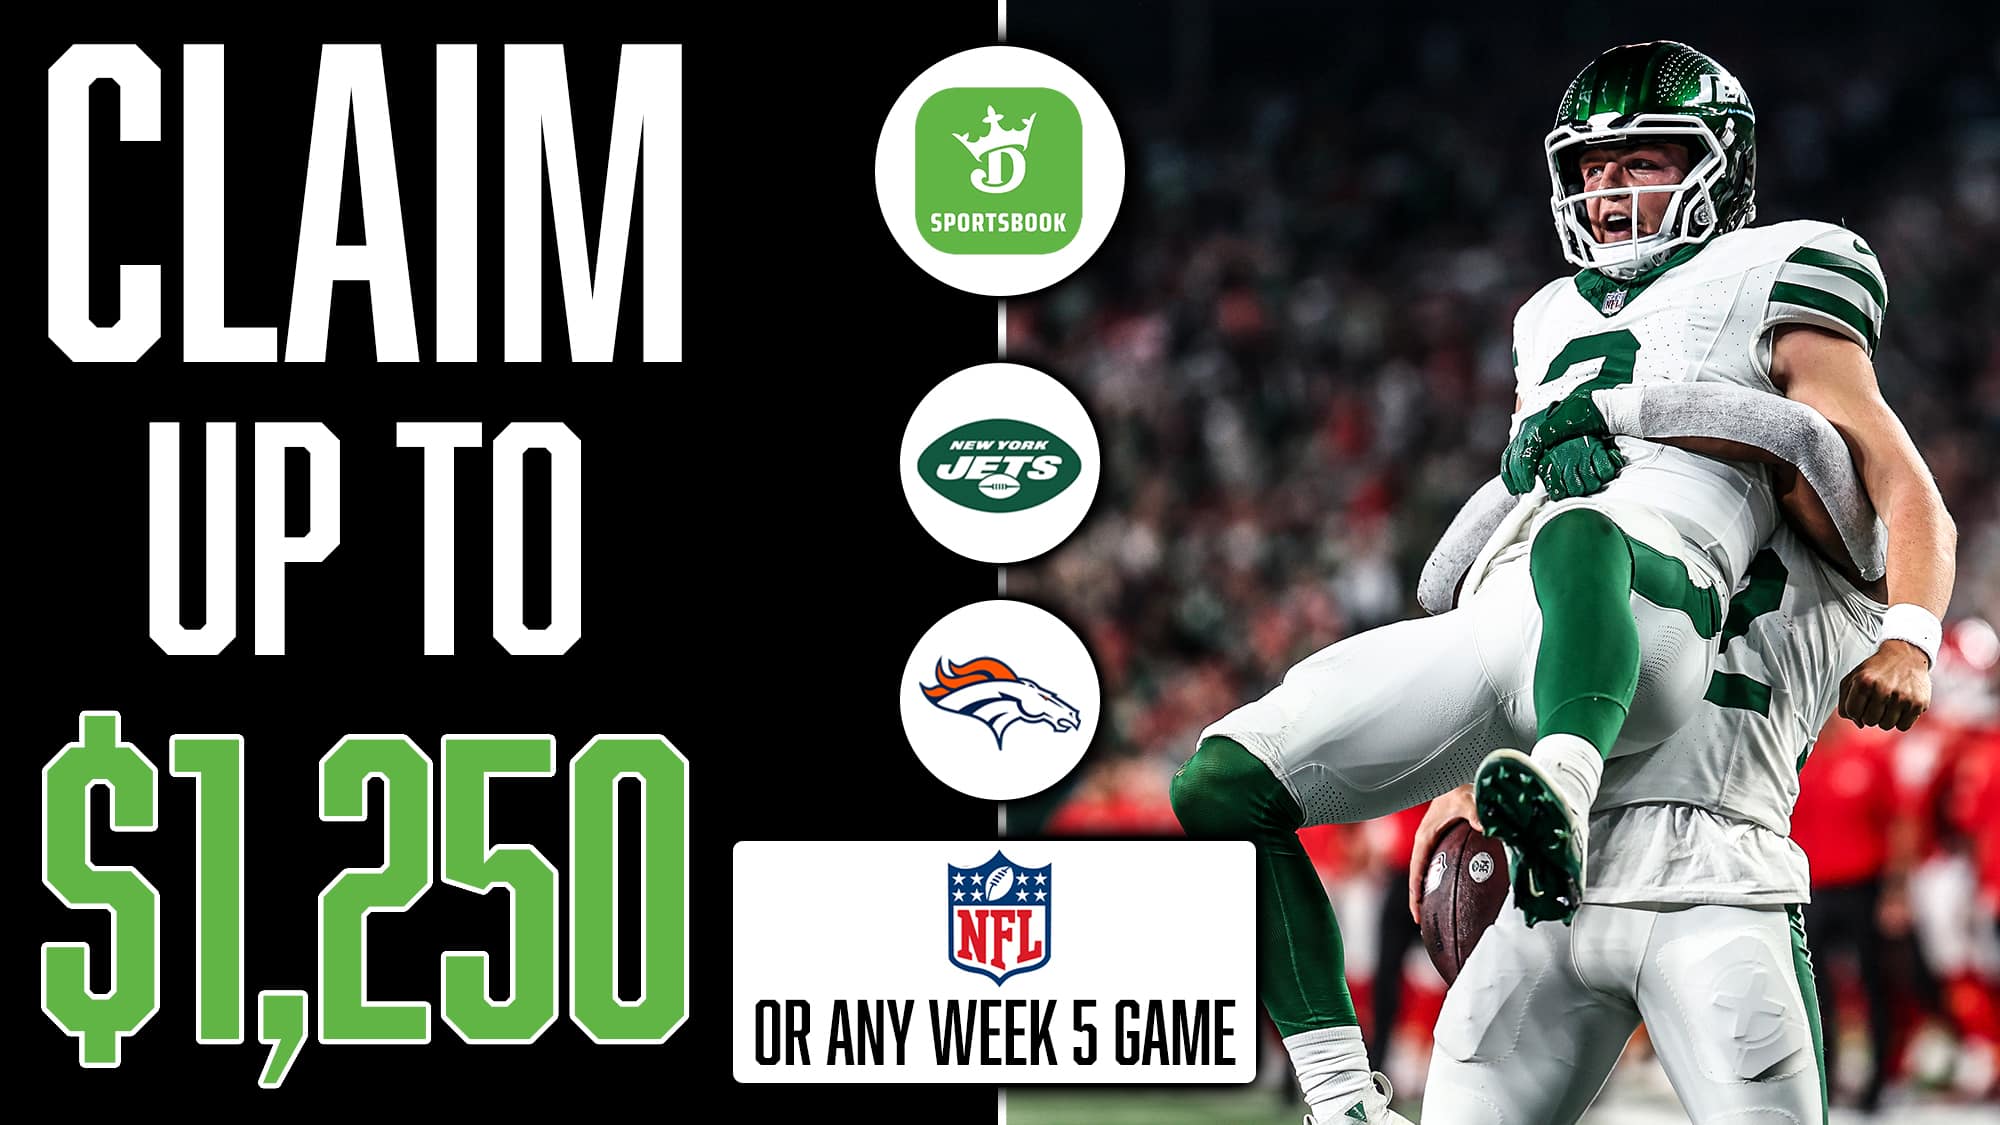 DraftKings Promo Code: Claim up to $1,250, New York Jets at Denver Broncos, NFL Week 5